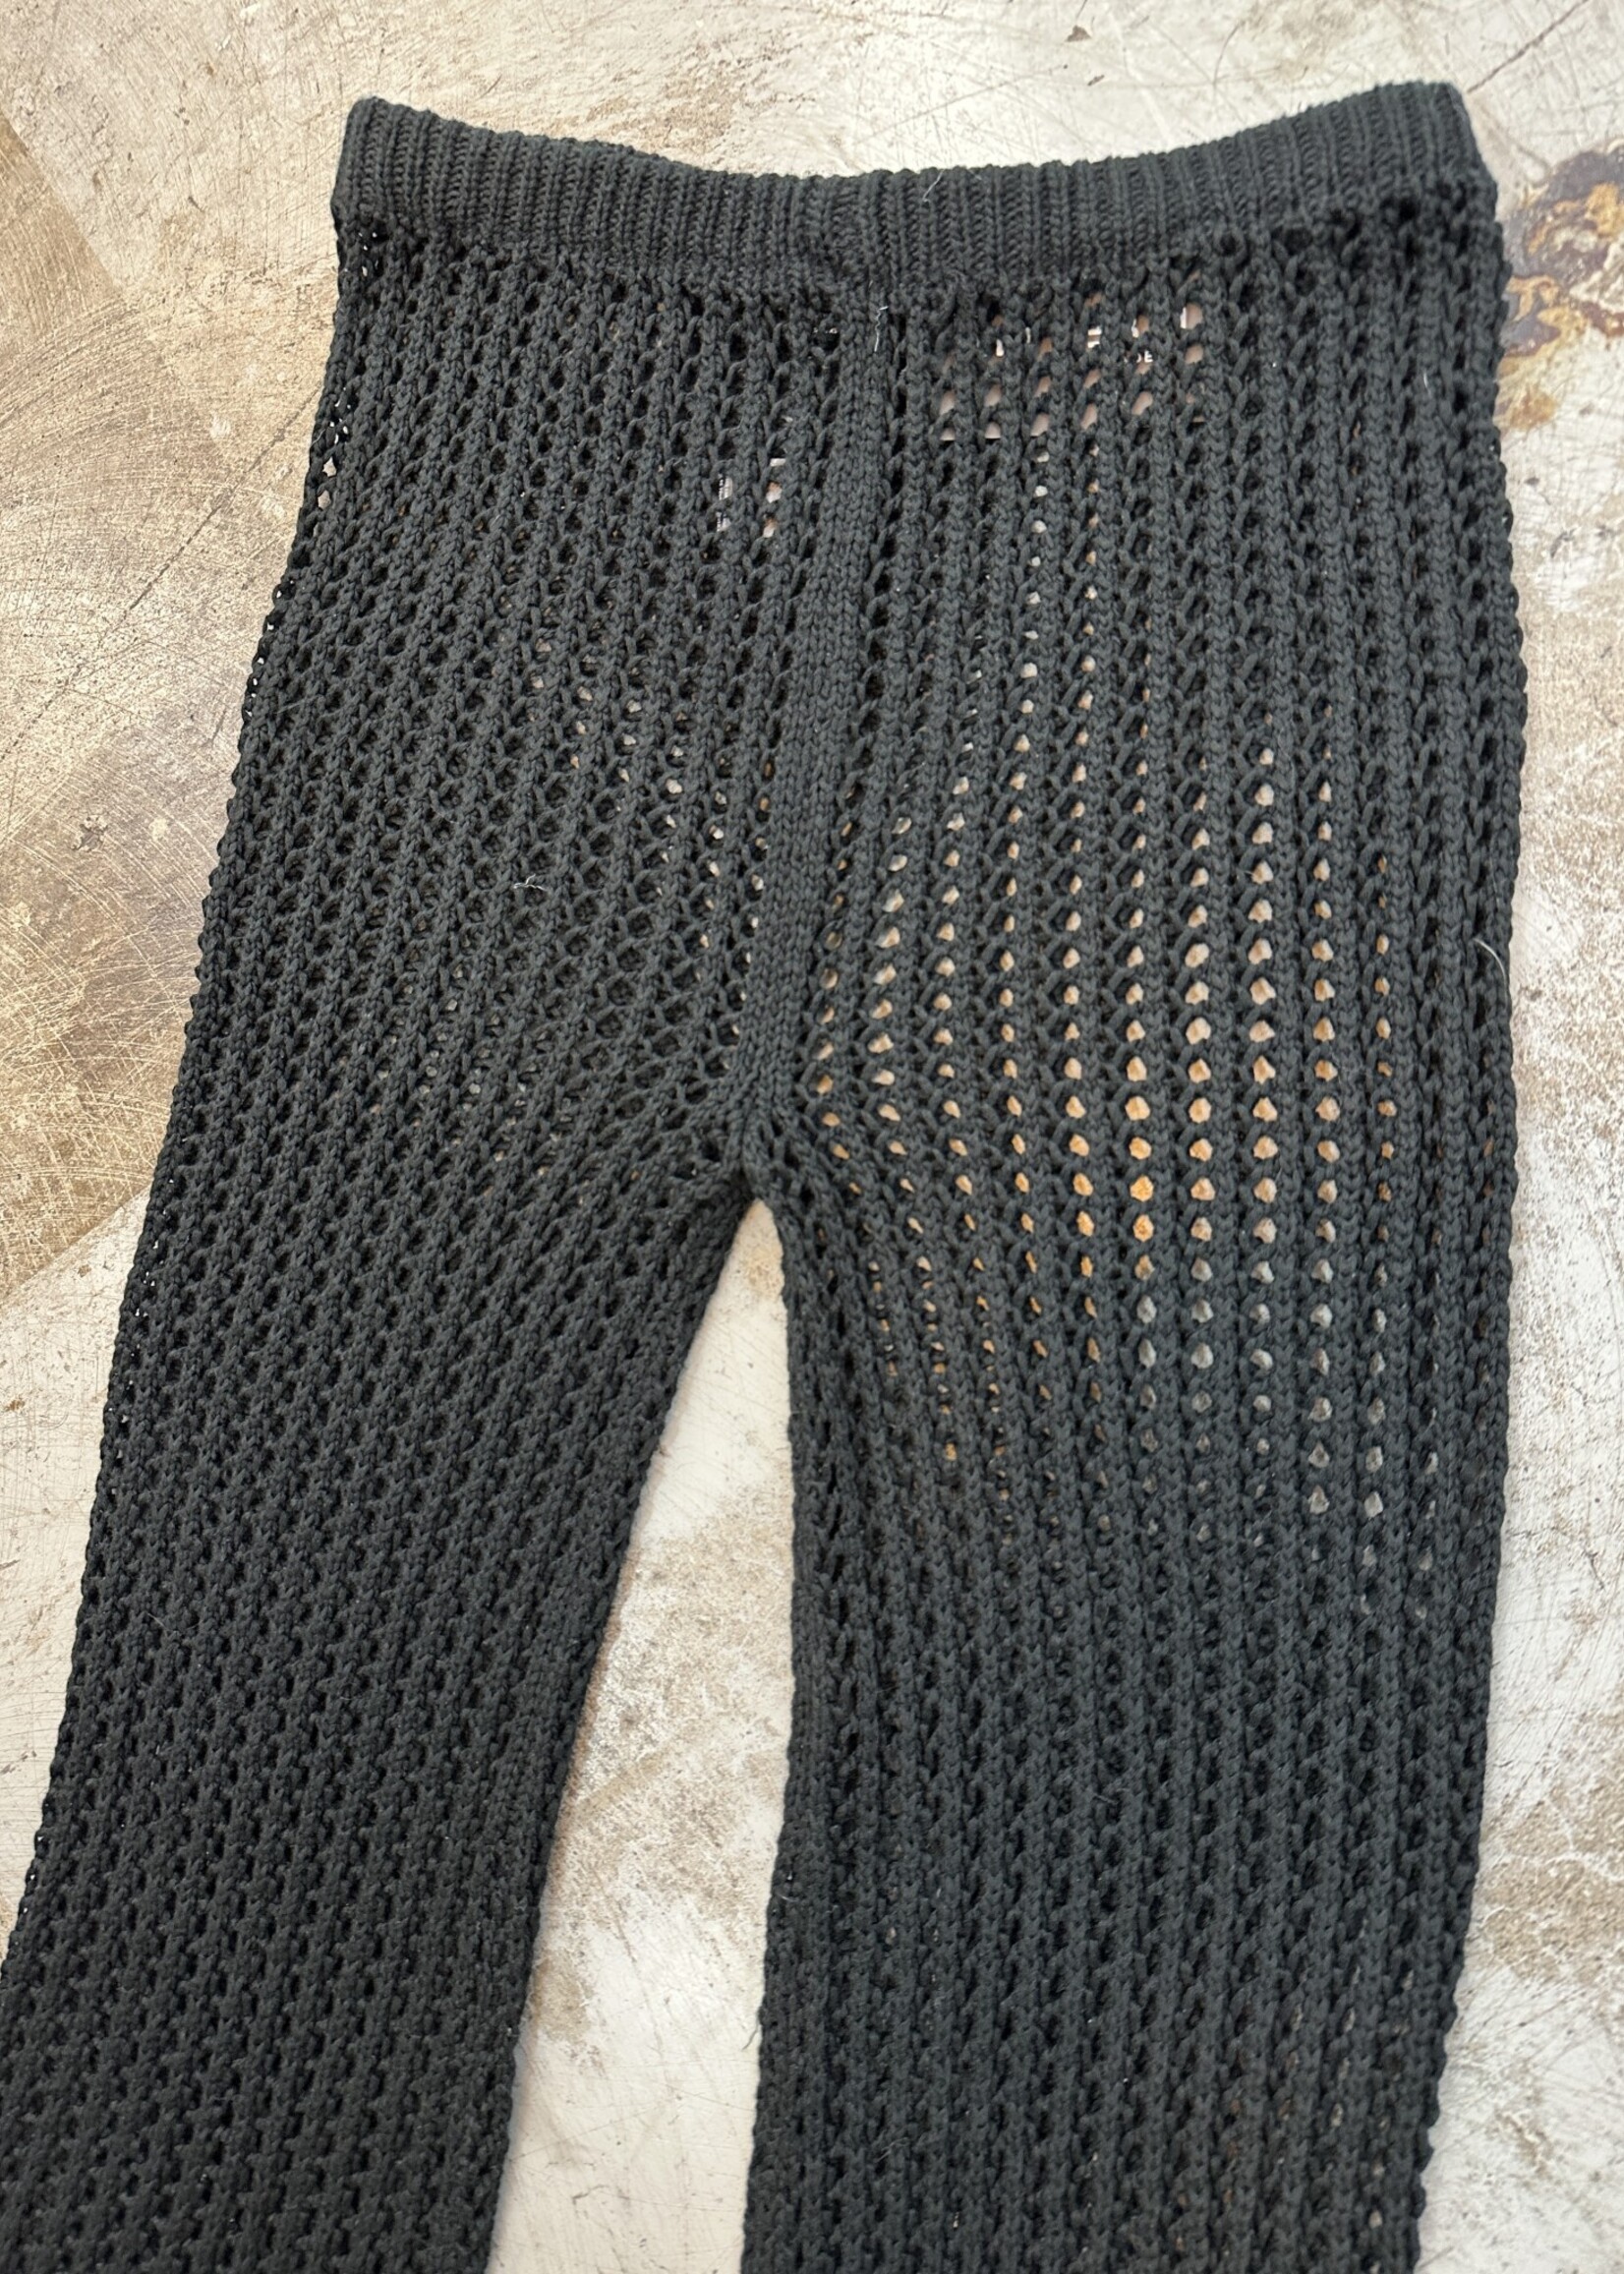 Finesse Black Open Knit Pants 27"-34"